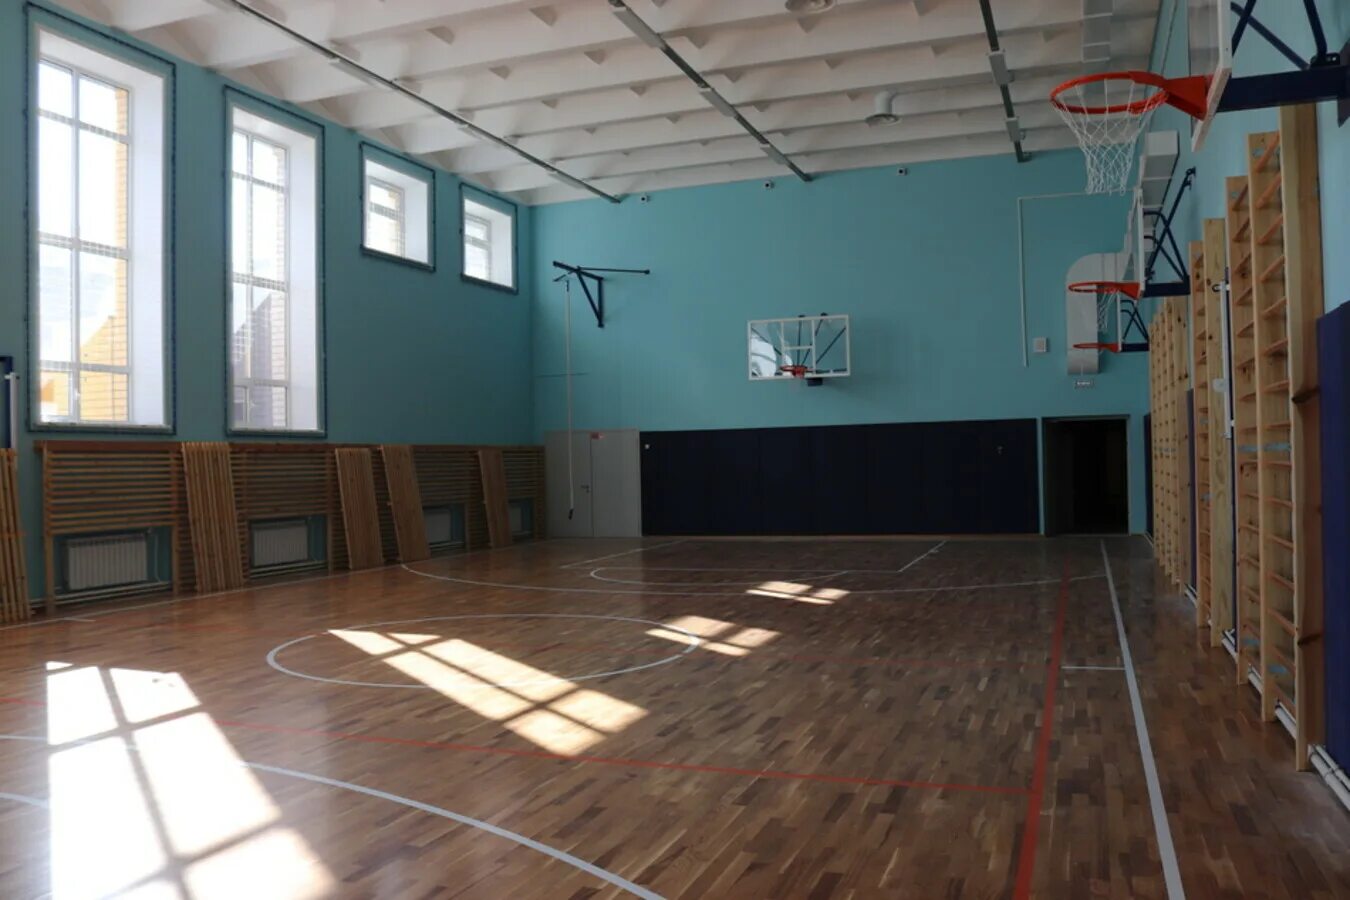 Зал 12 школы. Спортзал школы 106 Барнаул. 13 Школа Владивосток спортзал. Школа 133 Барнаул спортзал. 38 Школа Барнаул спортзал.